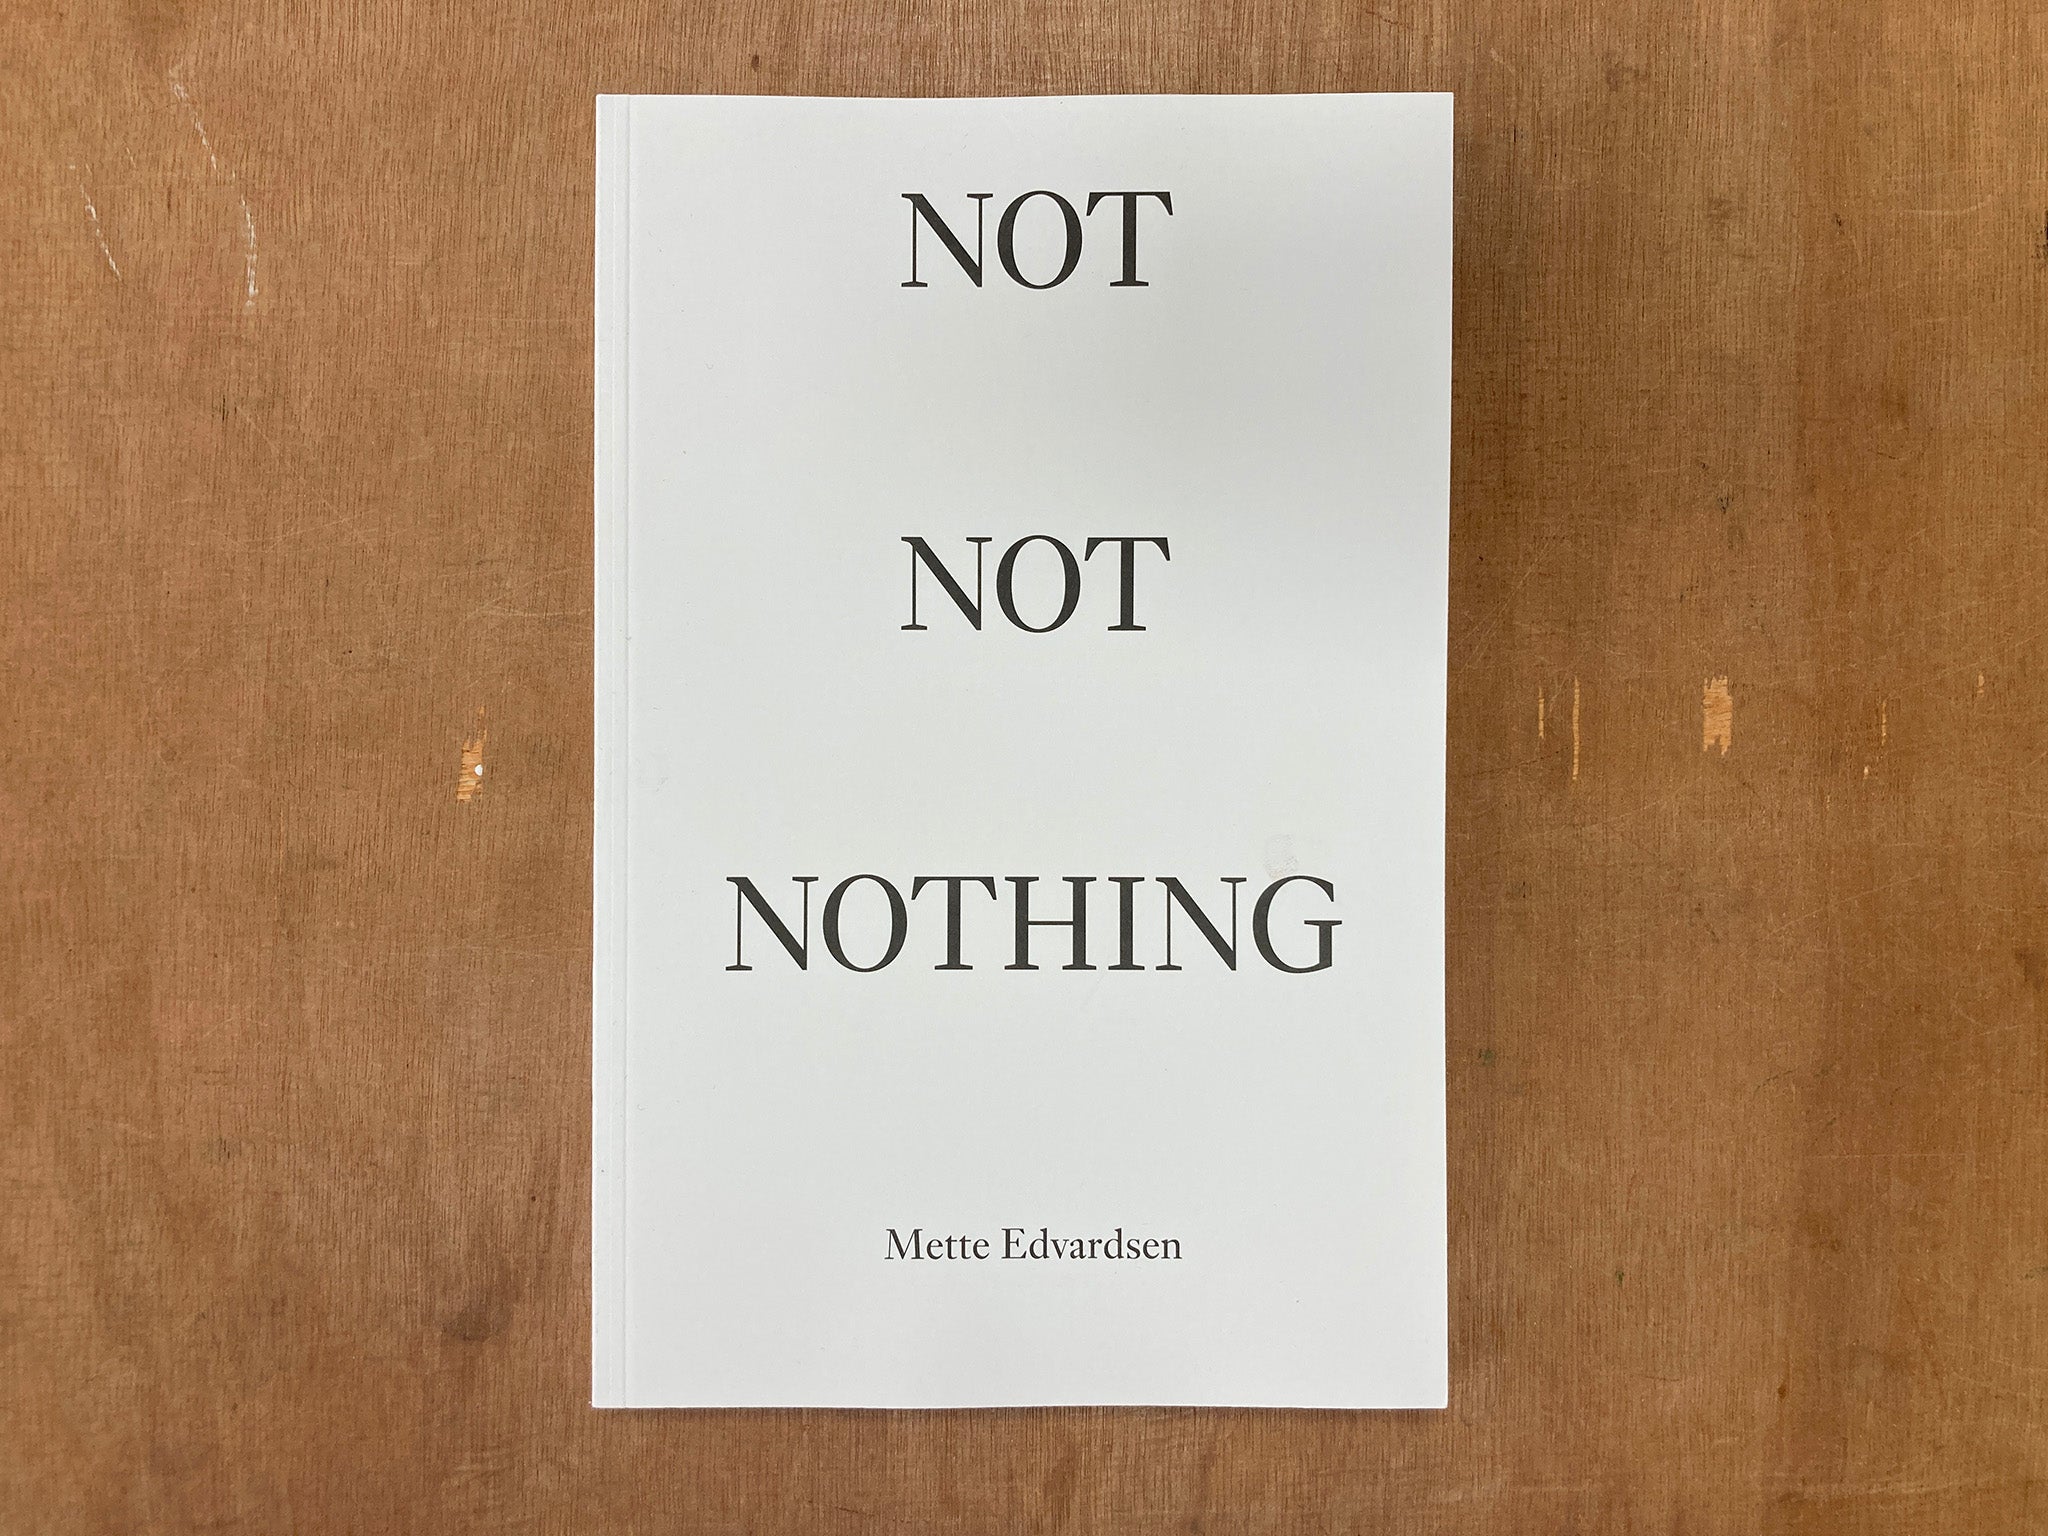 NOT NOT NOTHING by Mette Edvardsen